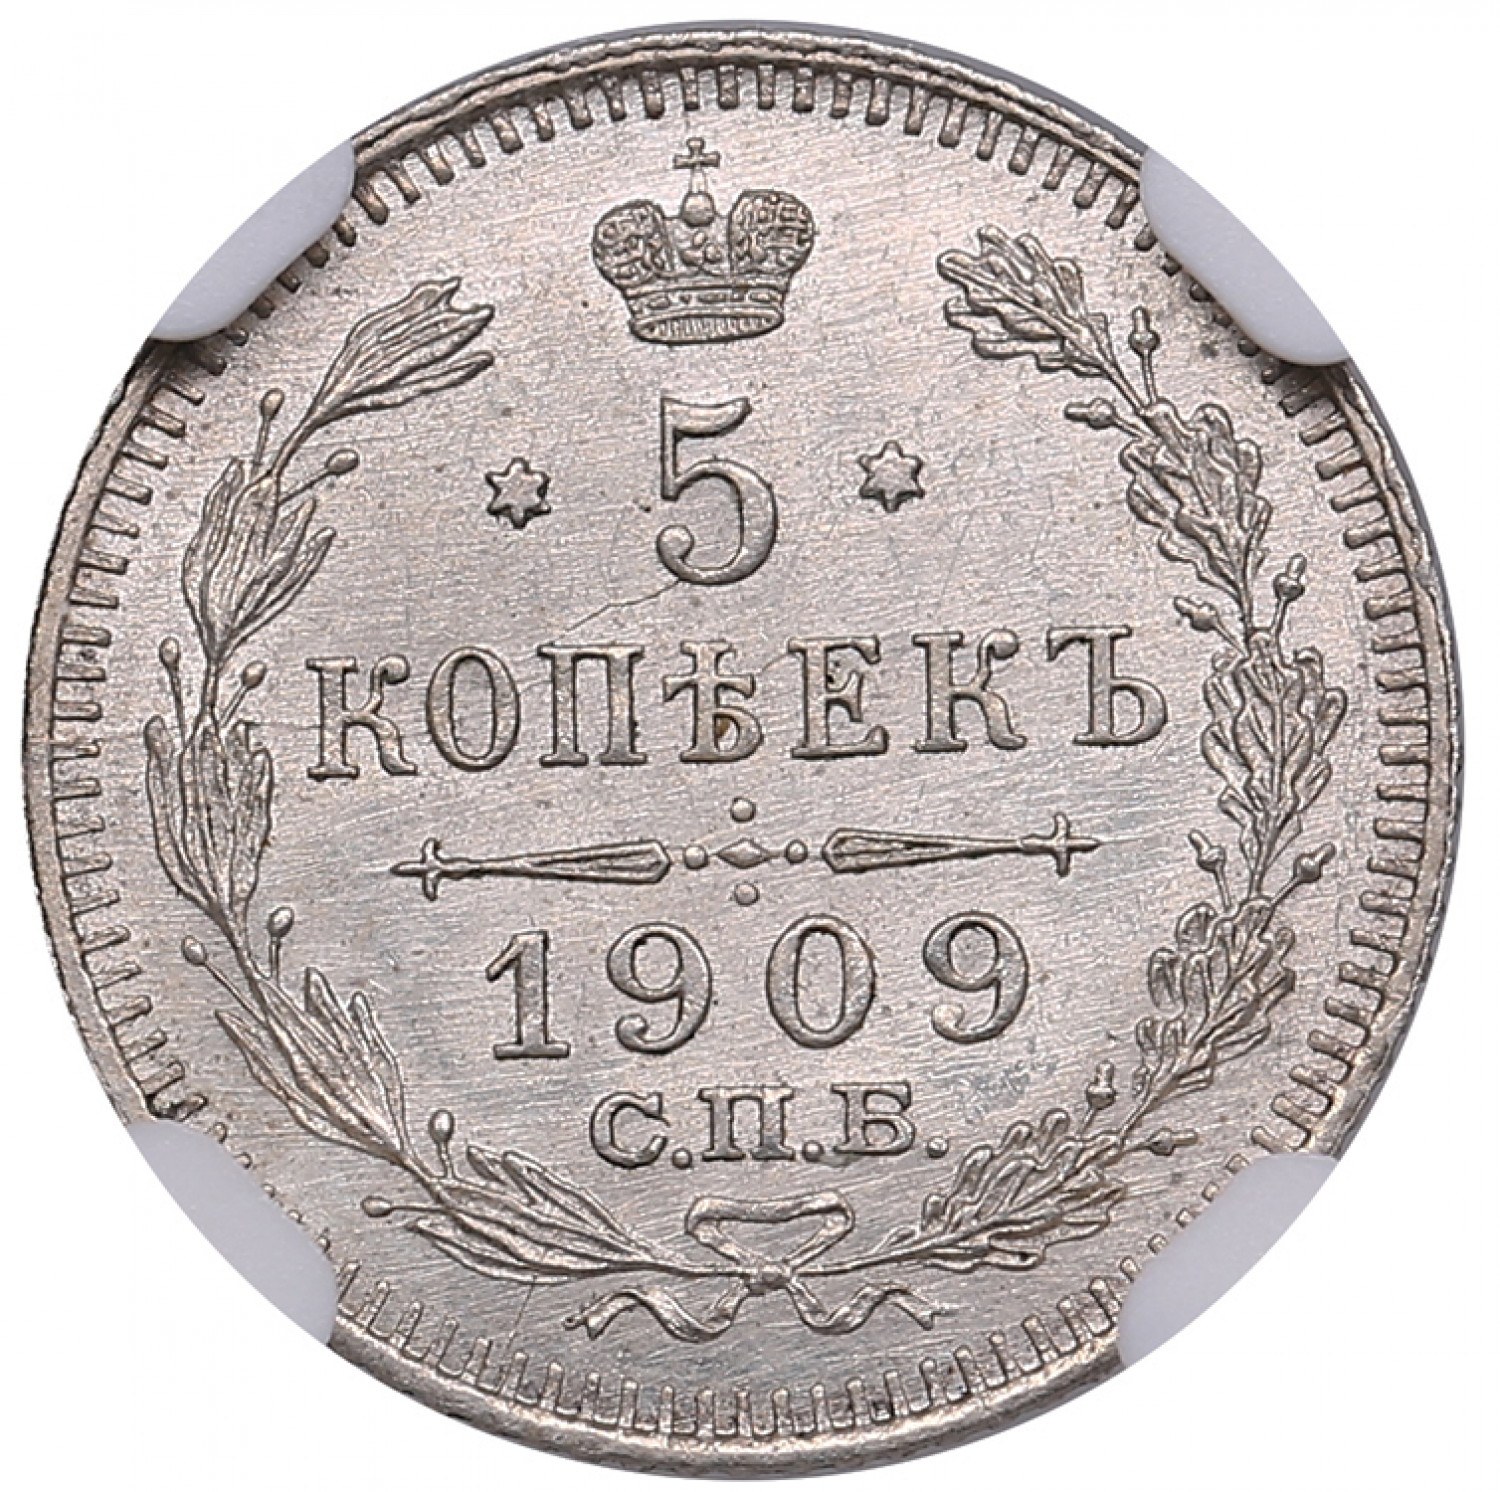 Полтина. Царские монеты 1858. Монета полтина серебро. Монета 1858 года. 1858 Год.